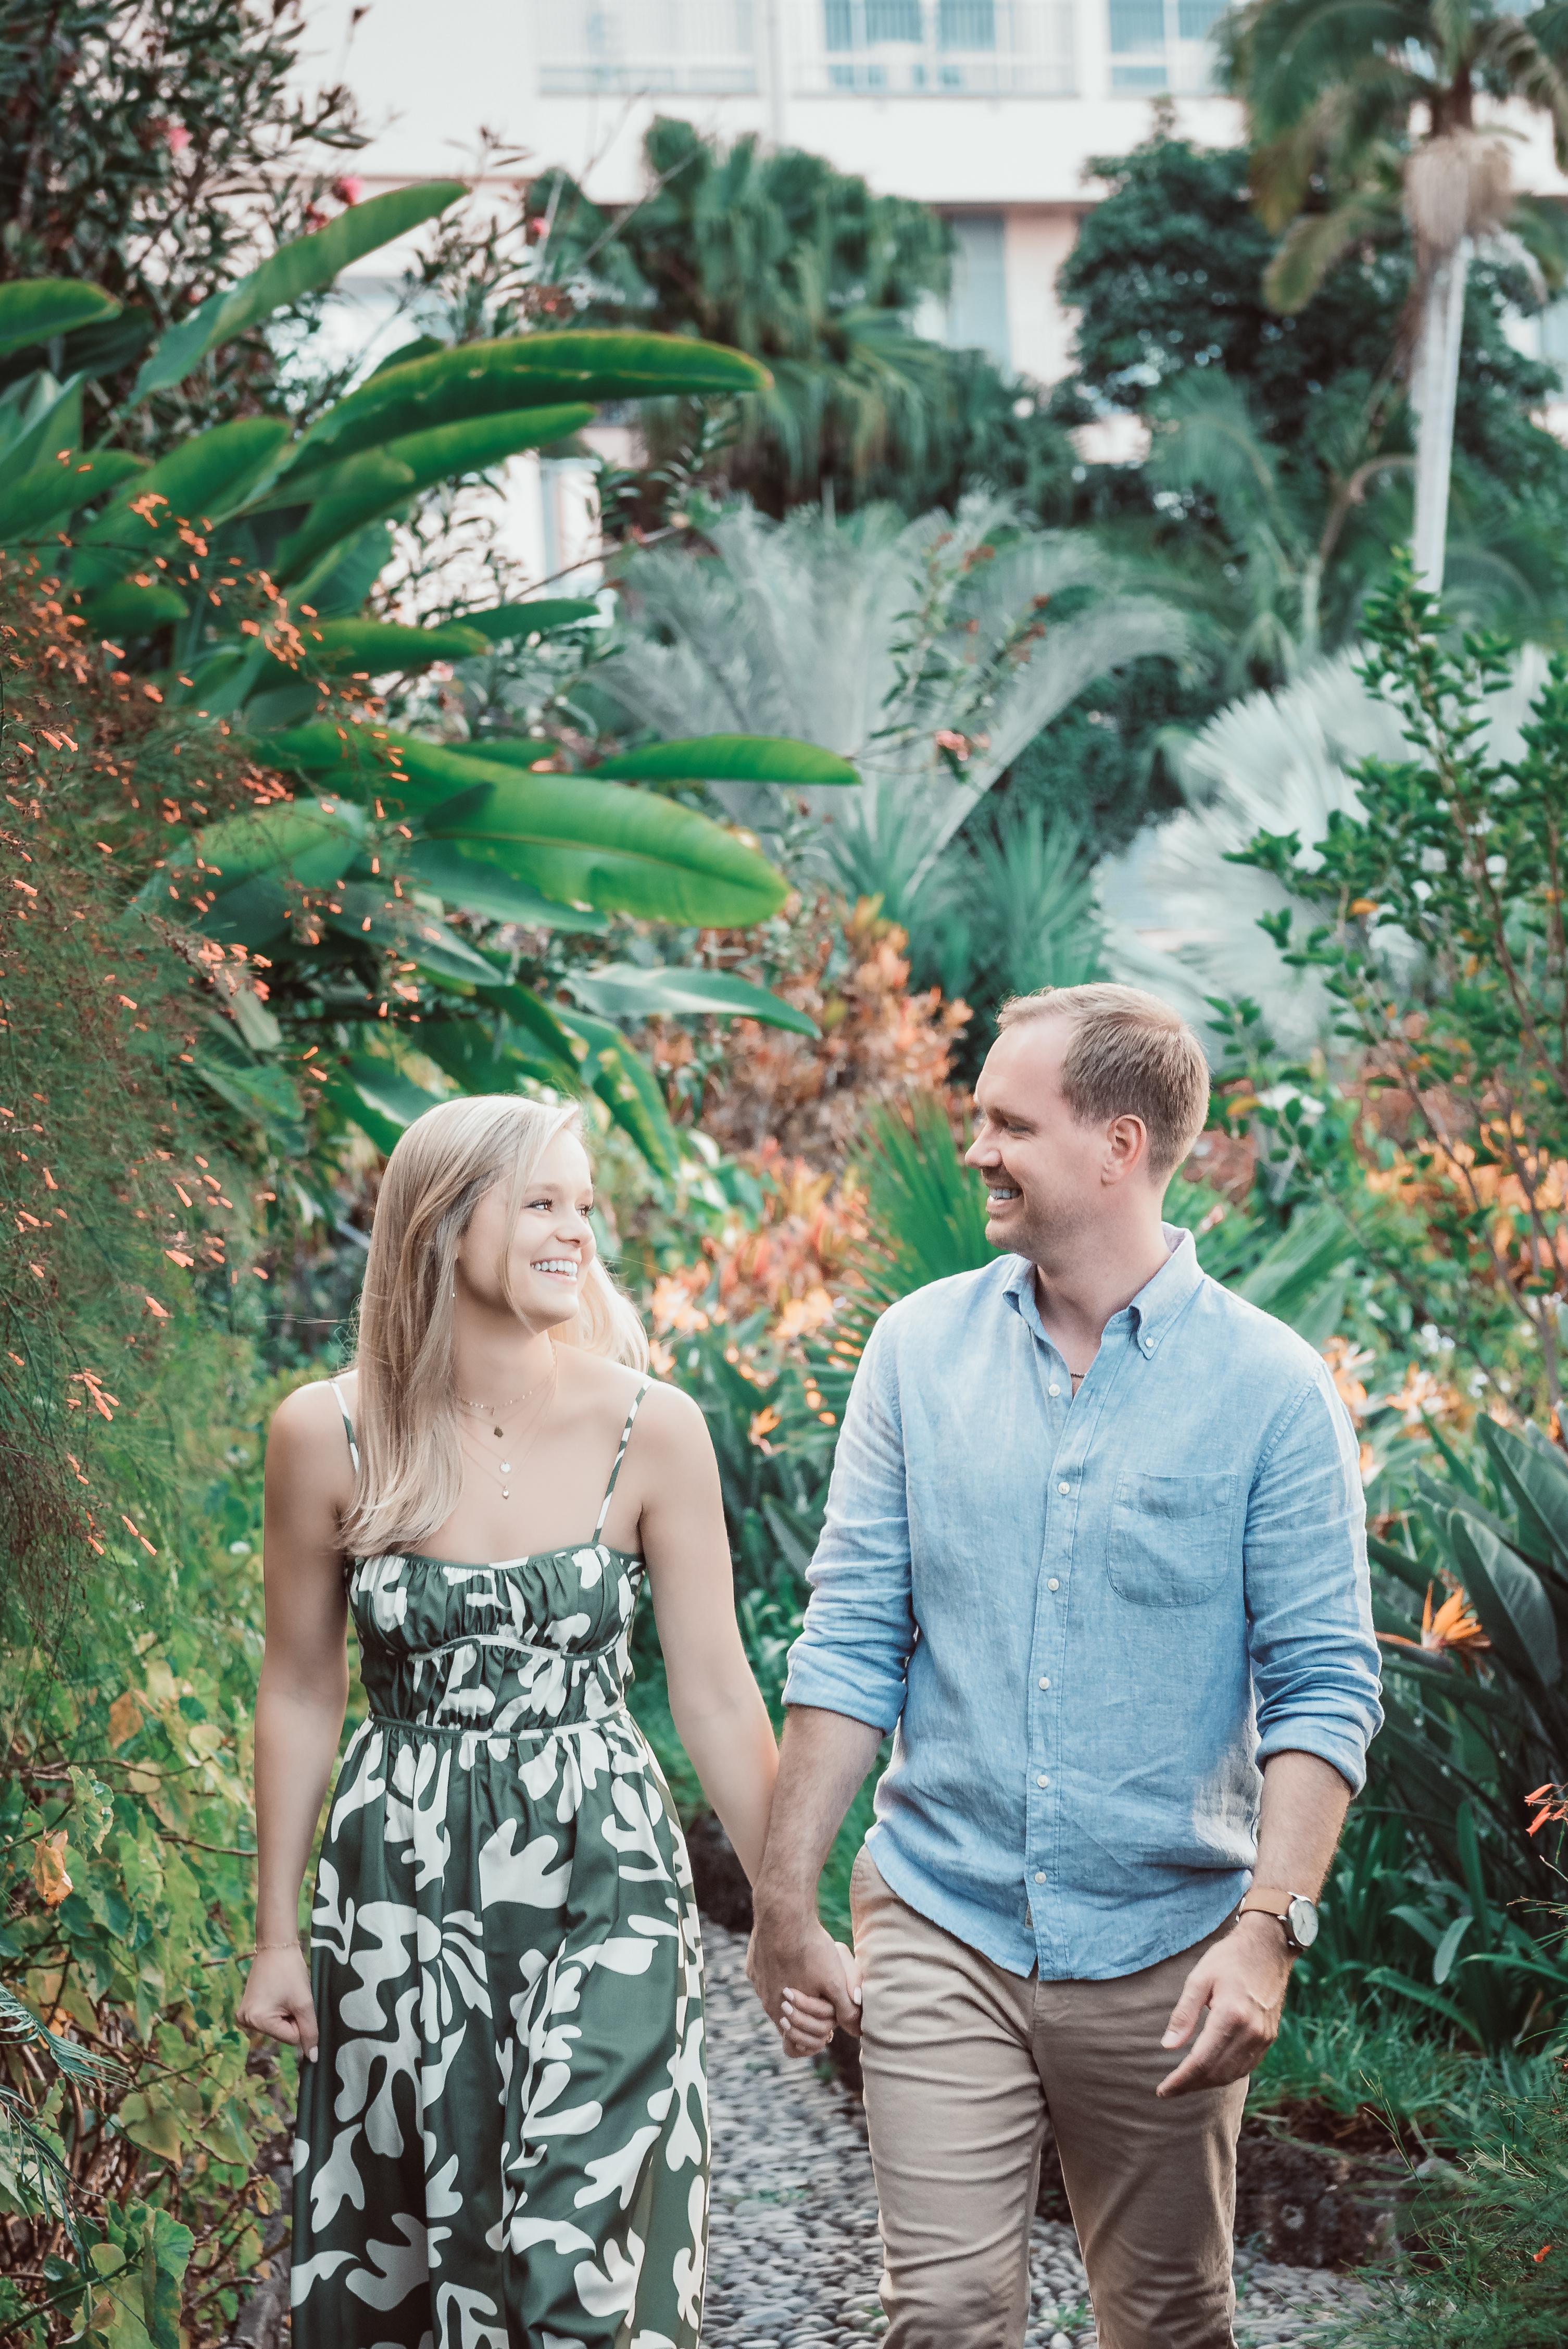 The Wedding Website of Anna Hilliard and Chris Gillett